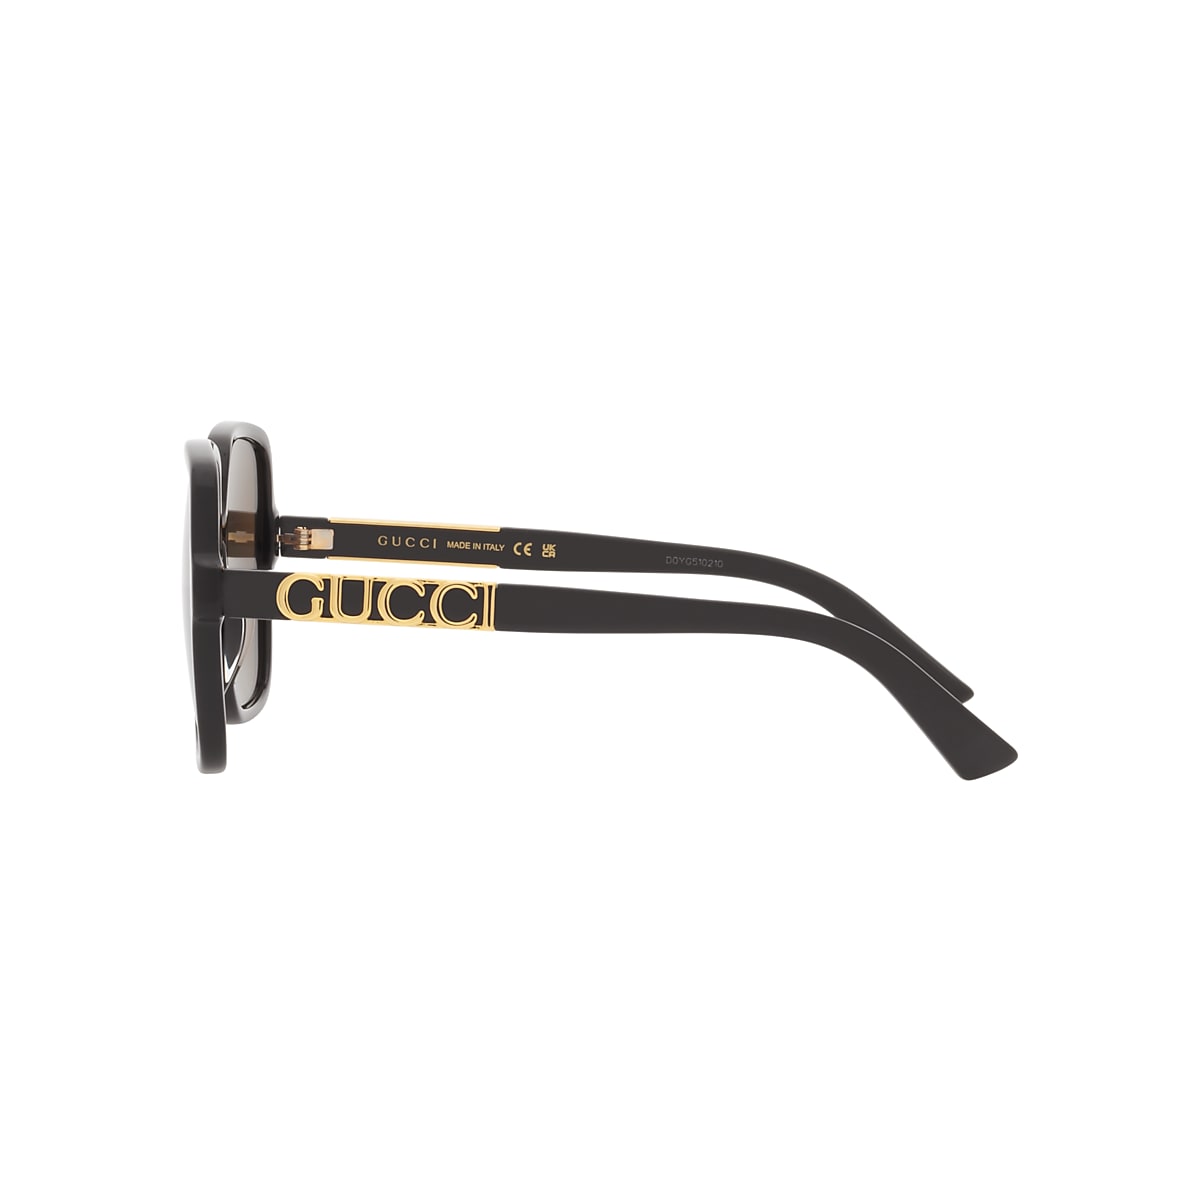 GUCCI GG1189S Black - Unisex Luxury Sunglasses, Brown Lens